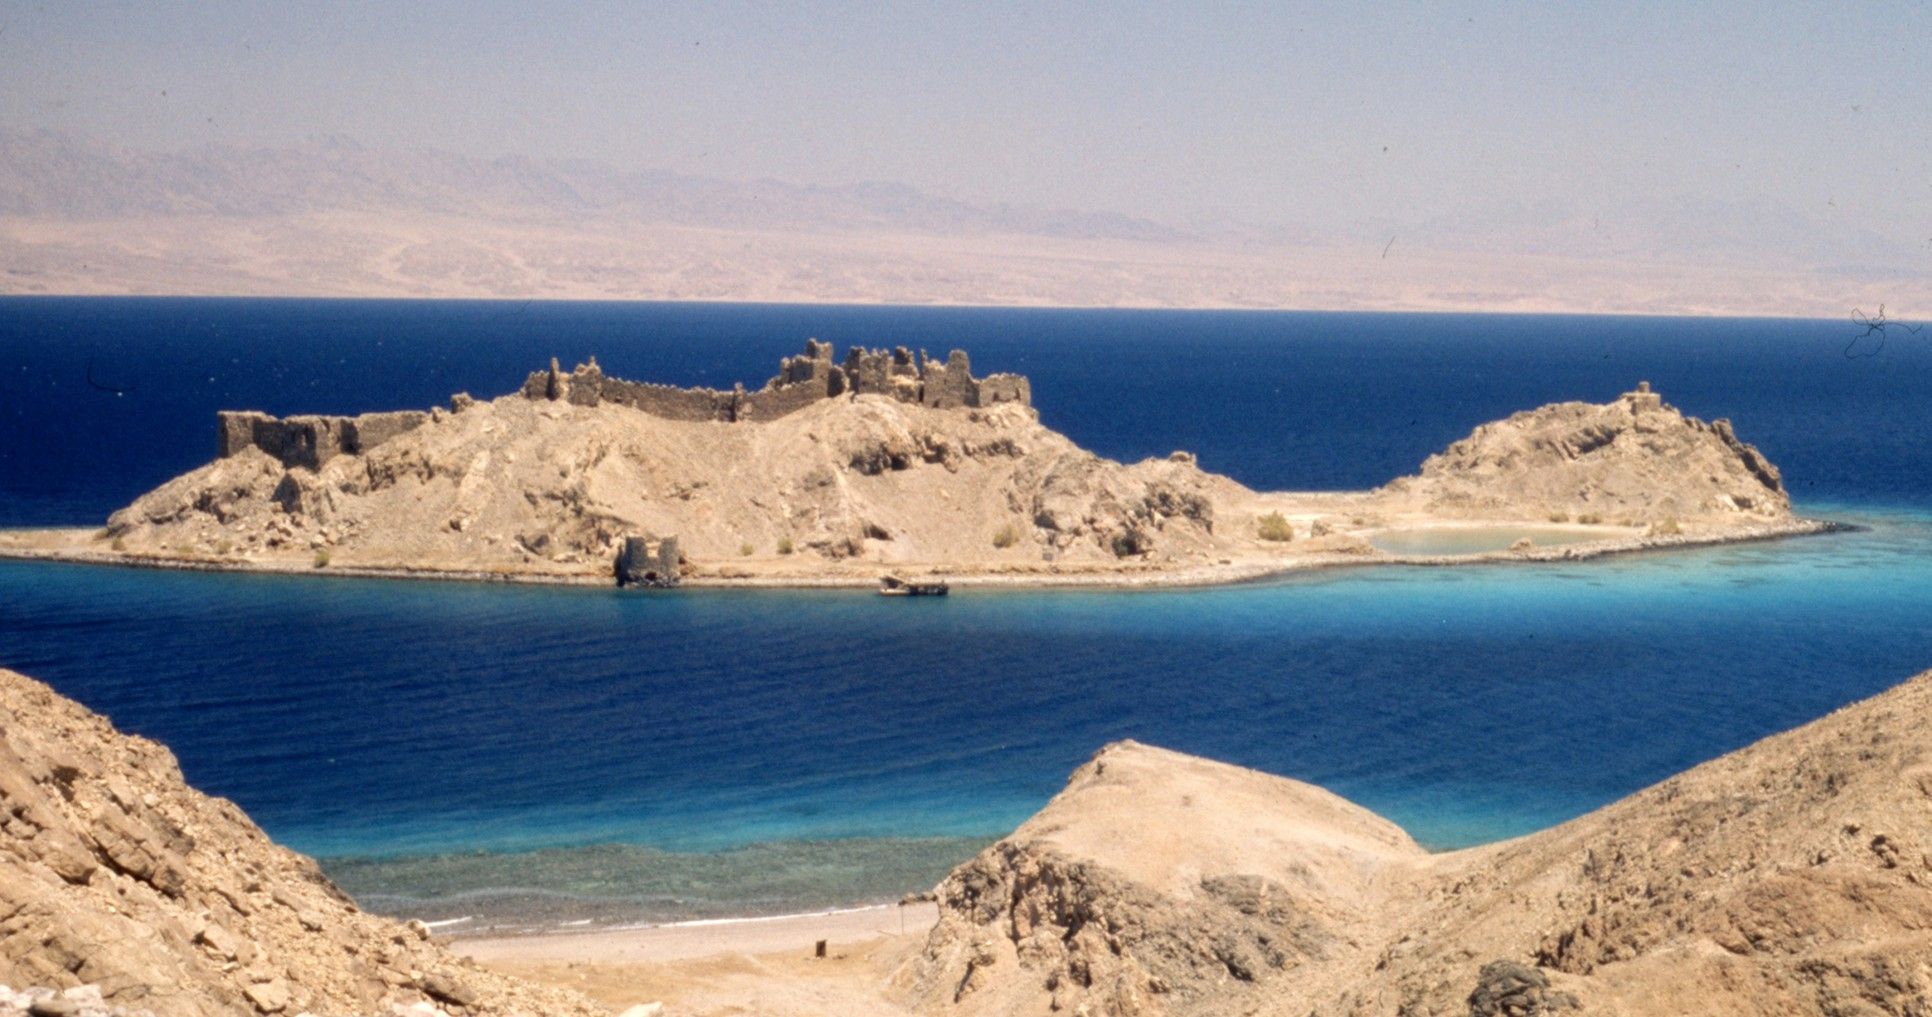 The Red Sea. Image via Church of Jesus Christ.